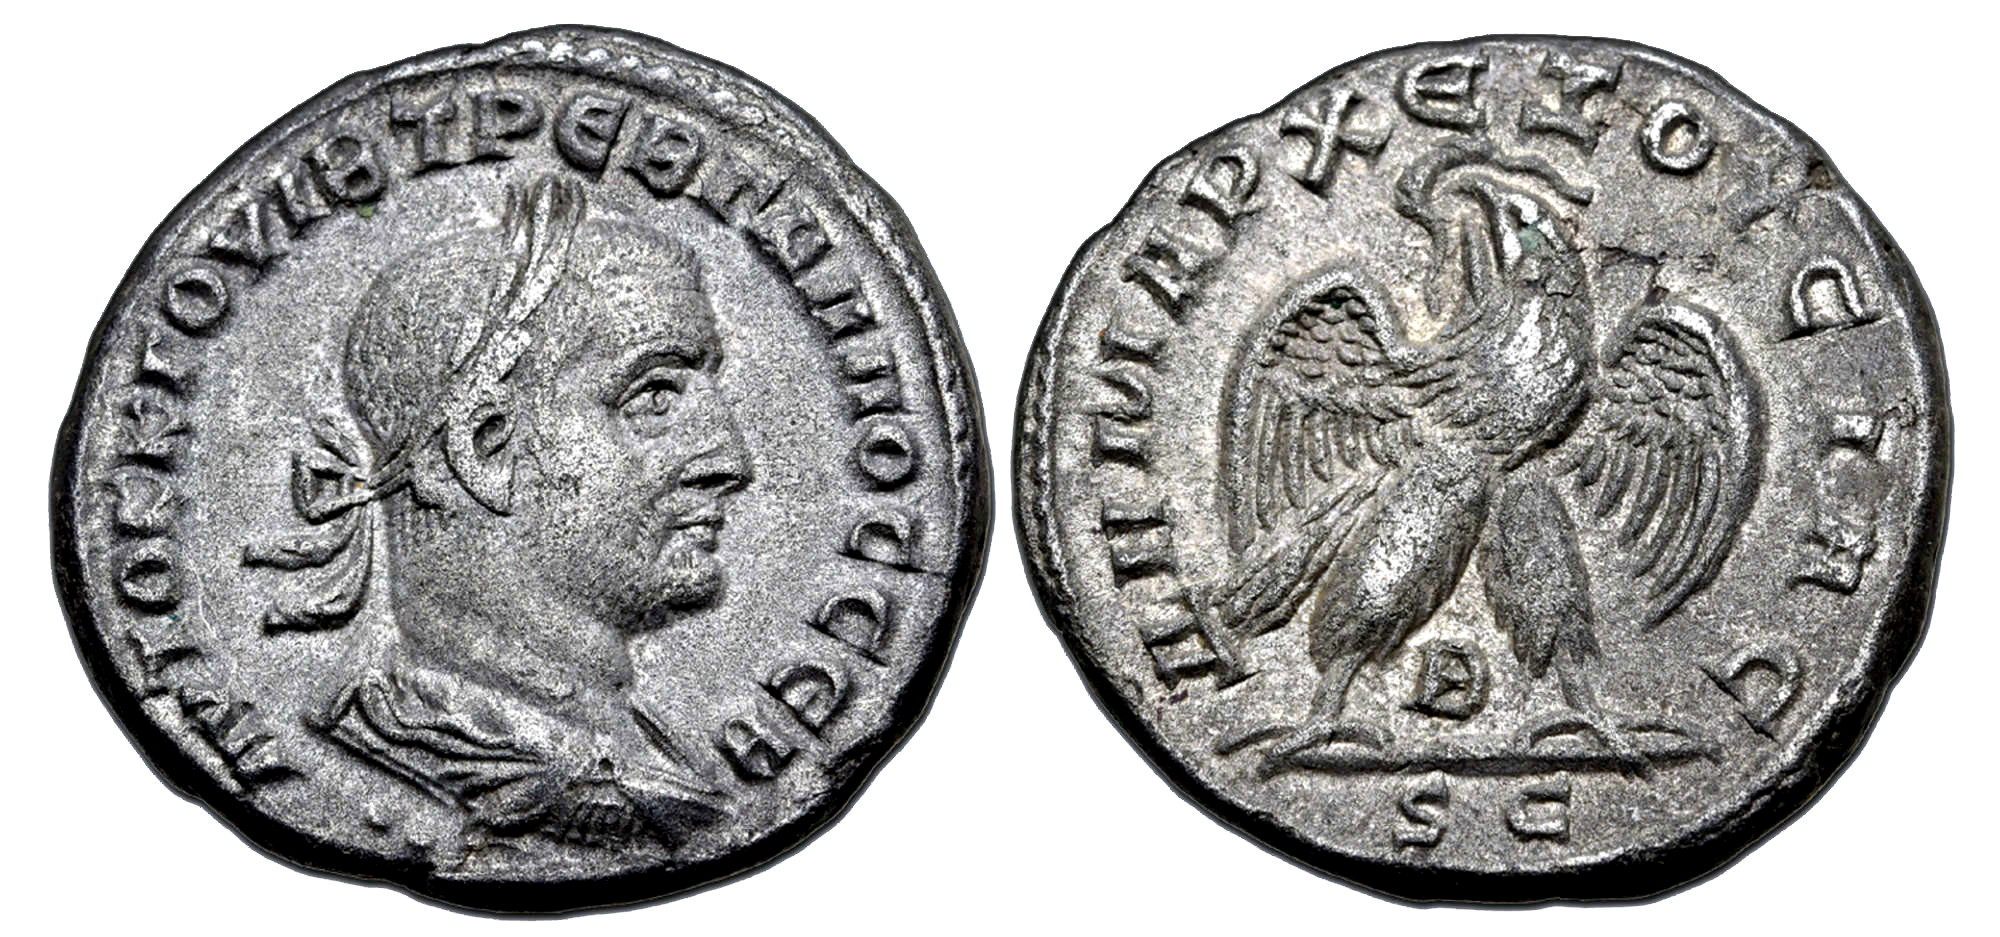 Trebonianus Gallus 251-253 e.Kr. Antiokia Tetradrachm